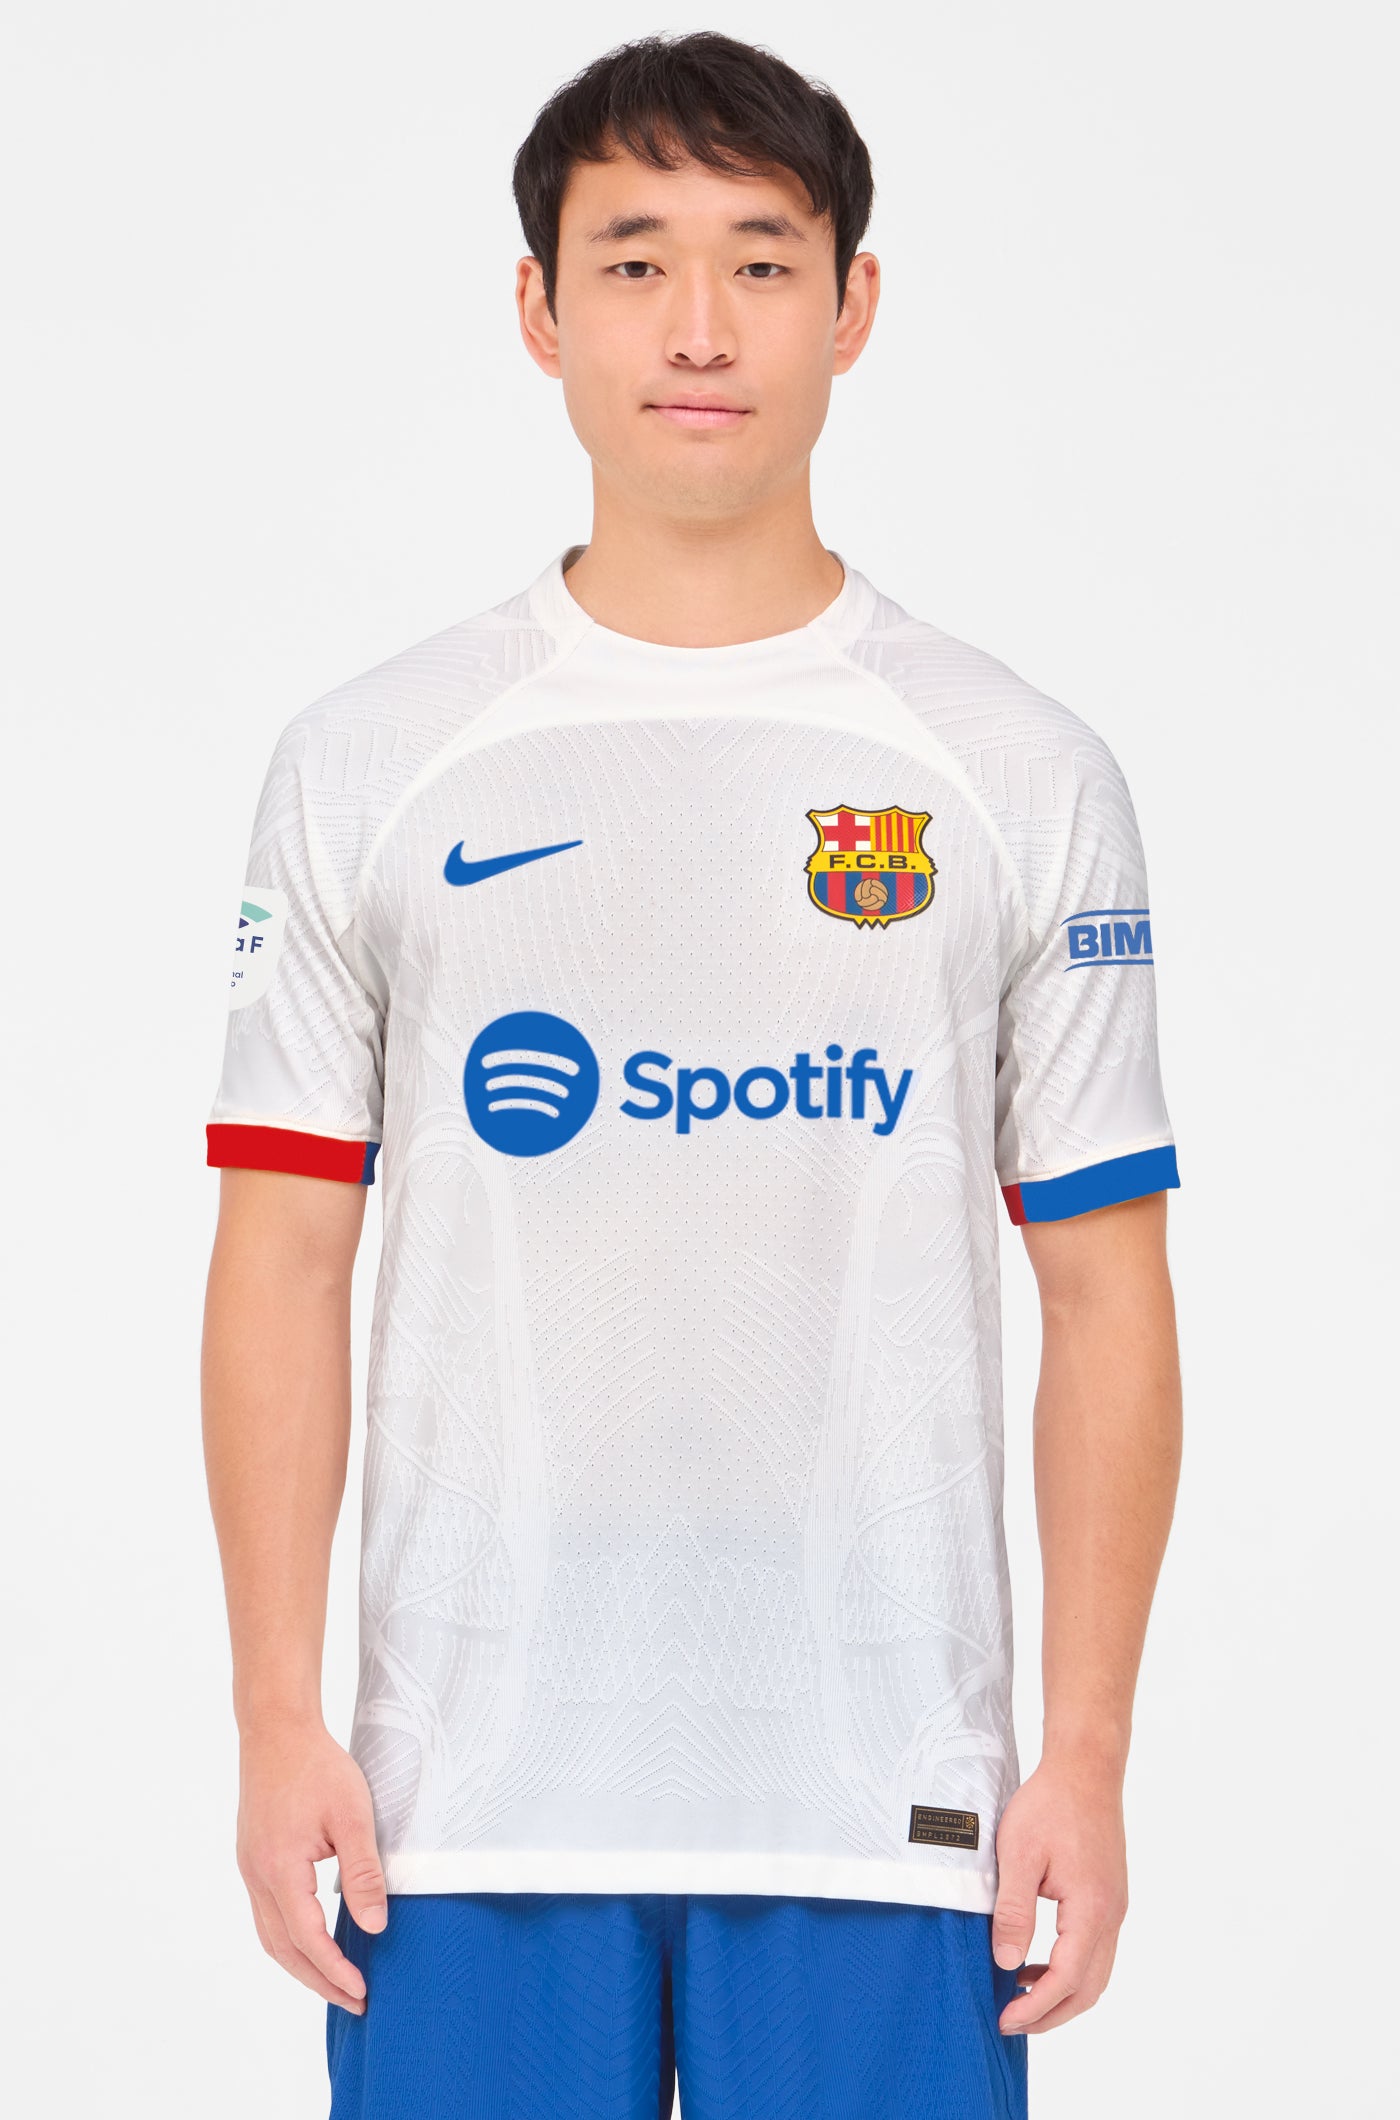 Liga F Camiseta segunda equipación FC Barcelona 23/24 Edición Jugador - MARTA